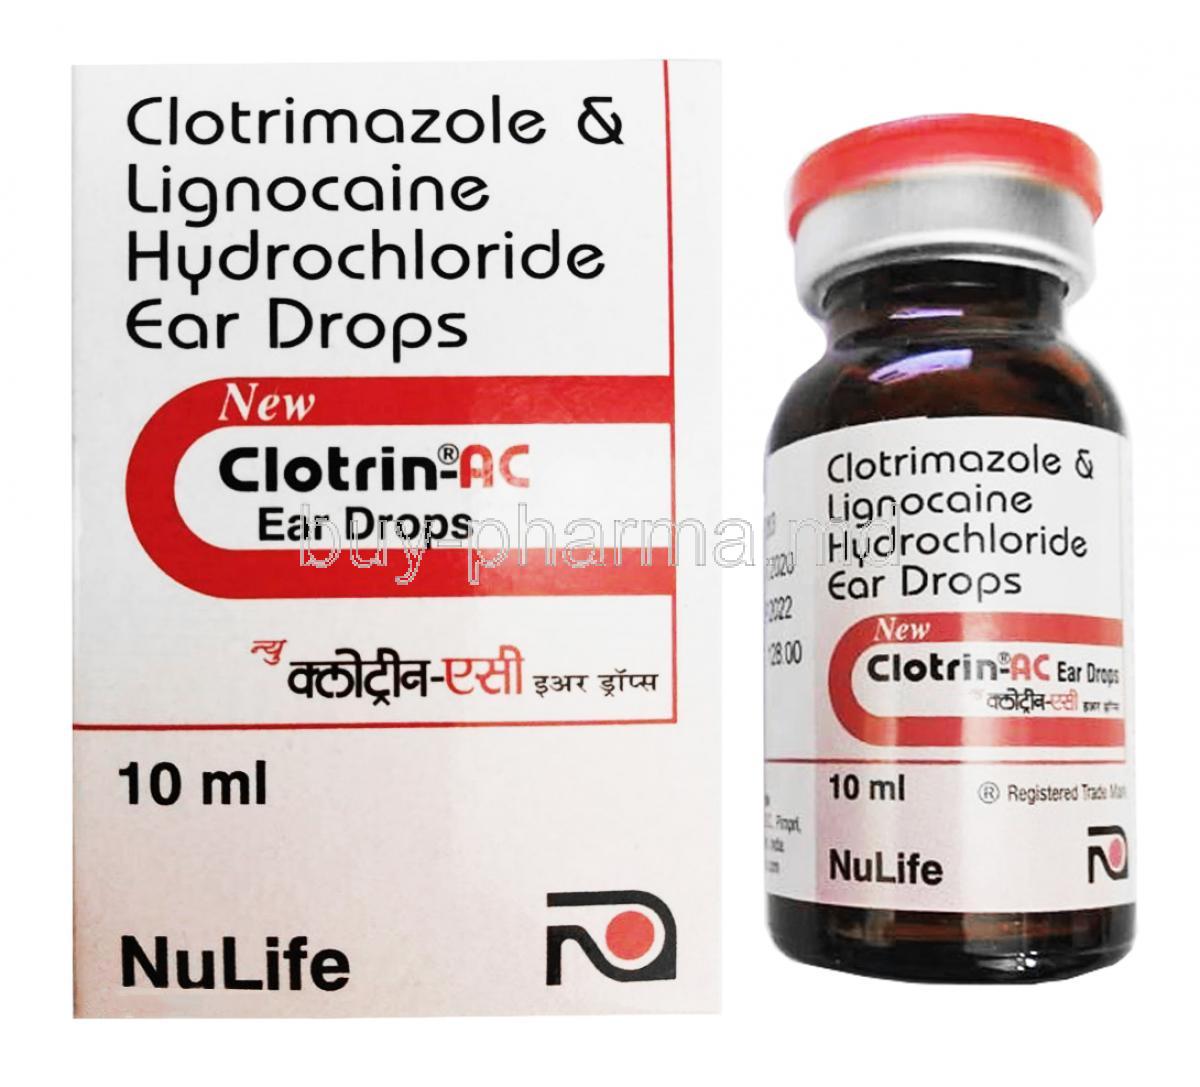 New Clotrin-AC Ear Drop, Lidocaine Clotrimazole box and bottle